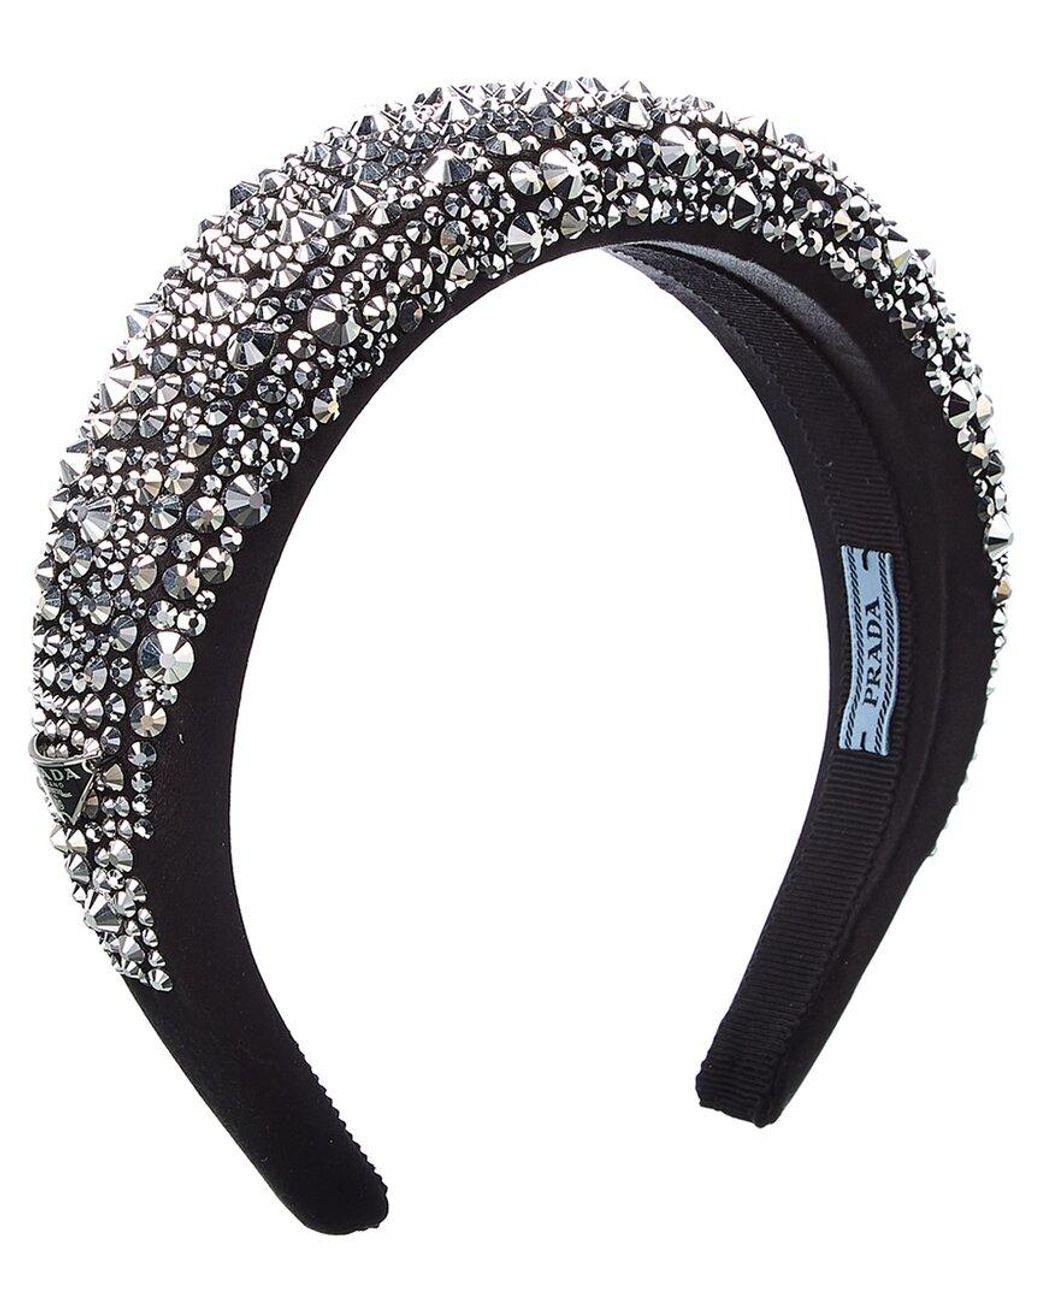 Prada Satin & Crystal Headband in Black | Lyst